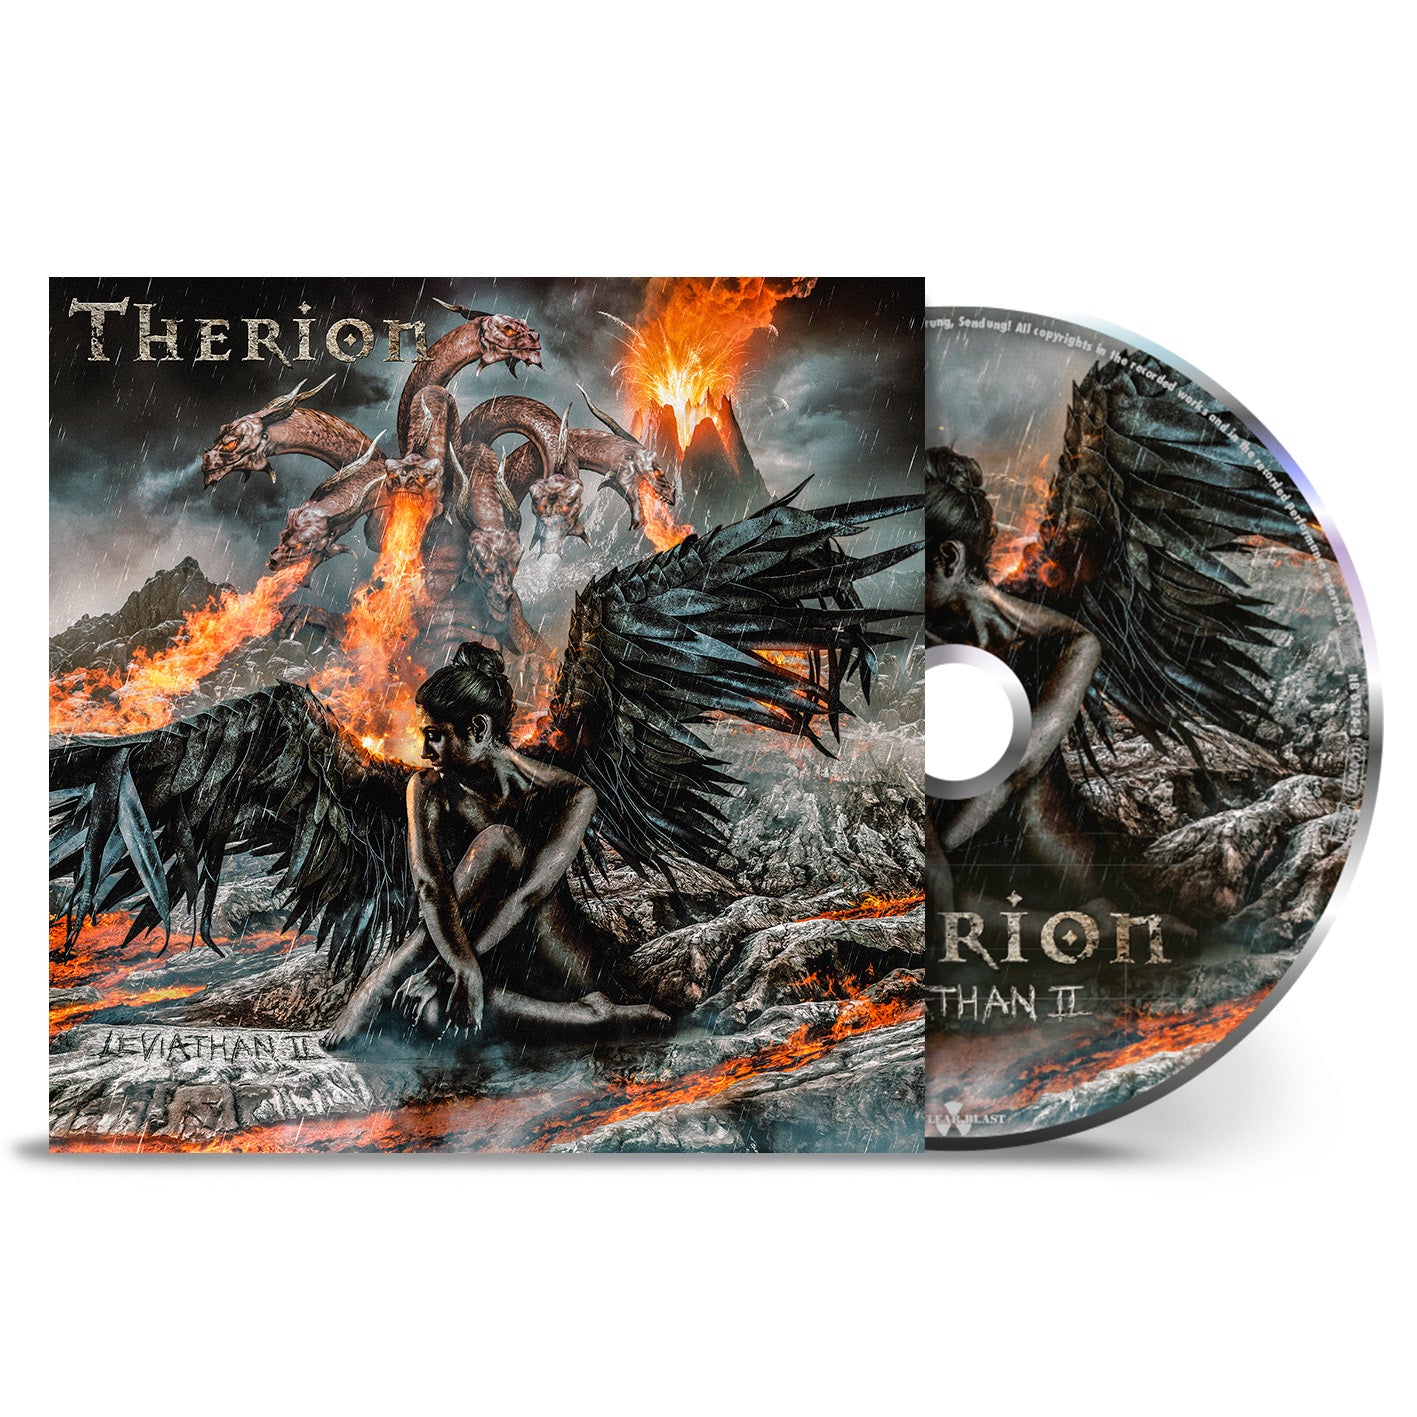 Therion "Leviathan II" Digipak CD w/ Bonus Tracks